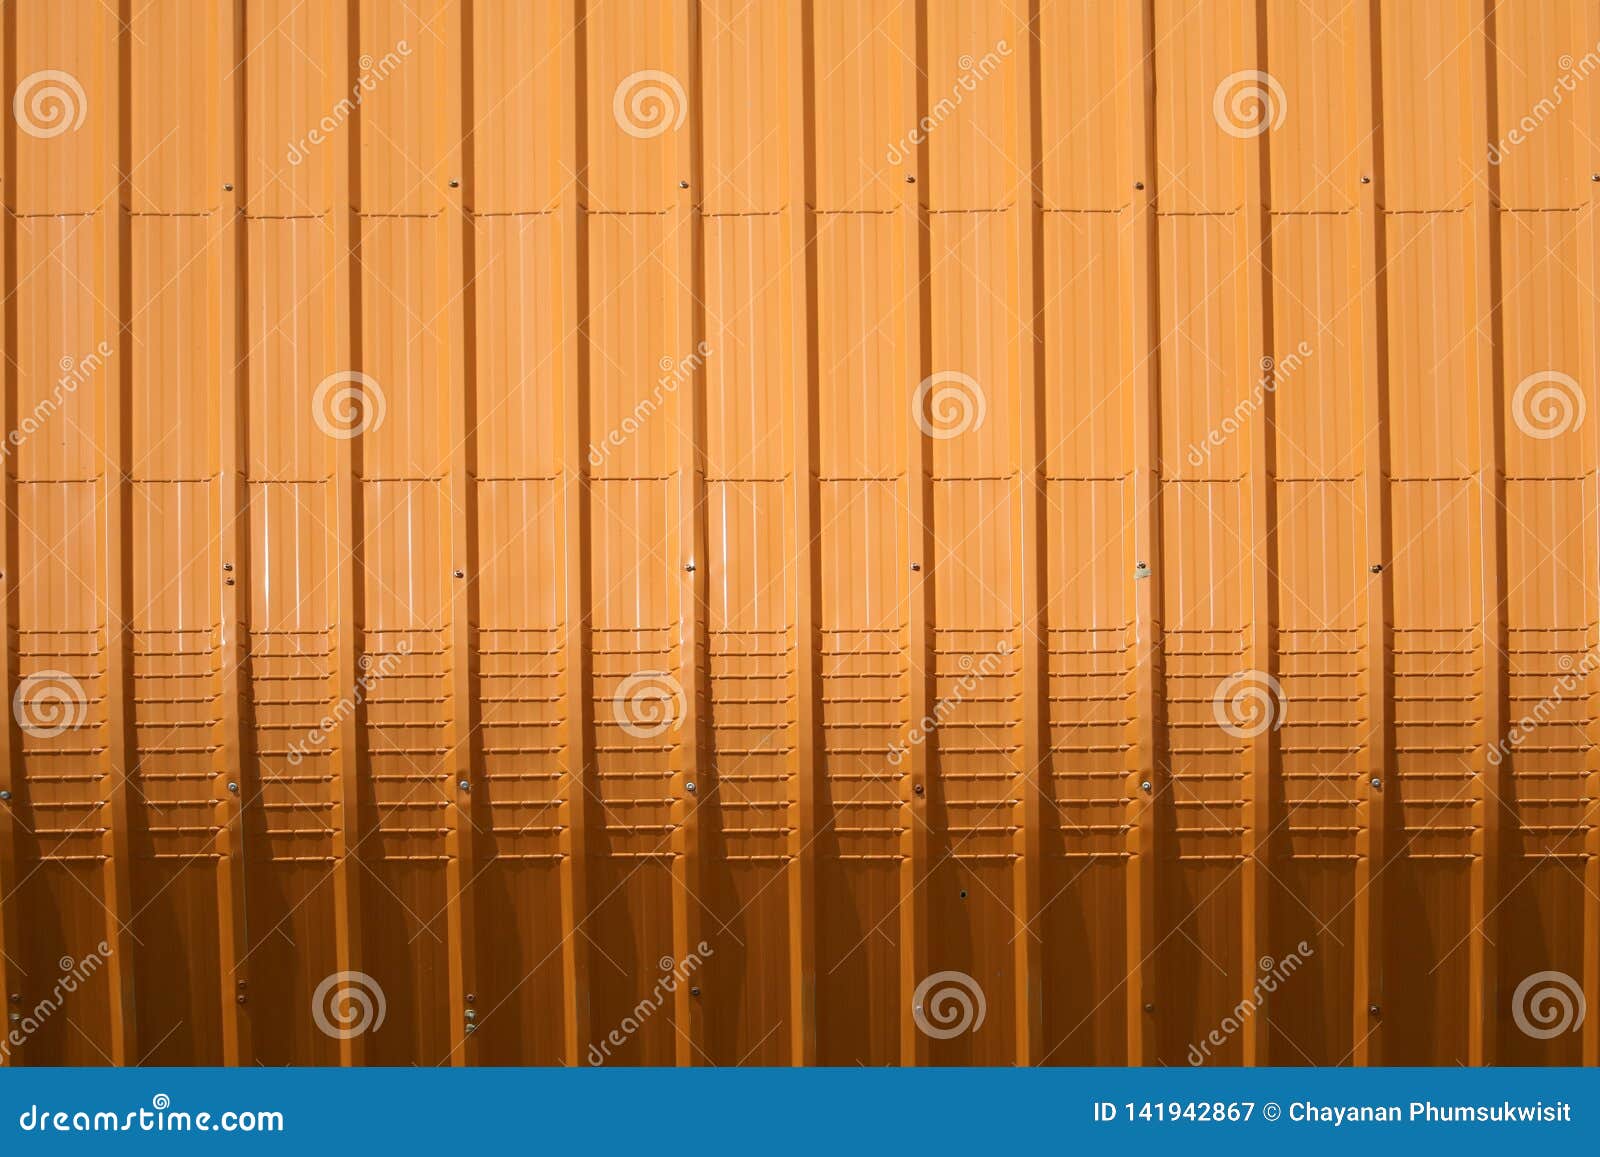 orange metal sheet pattern and vertical line 